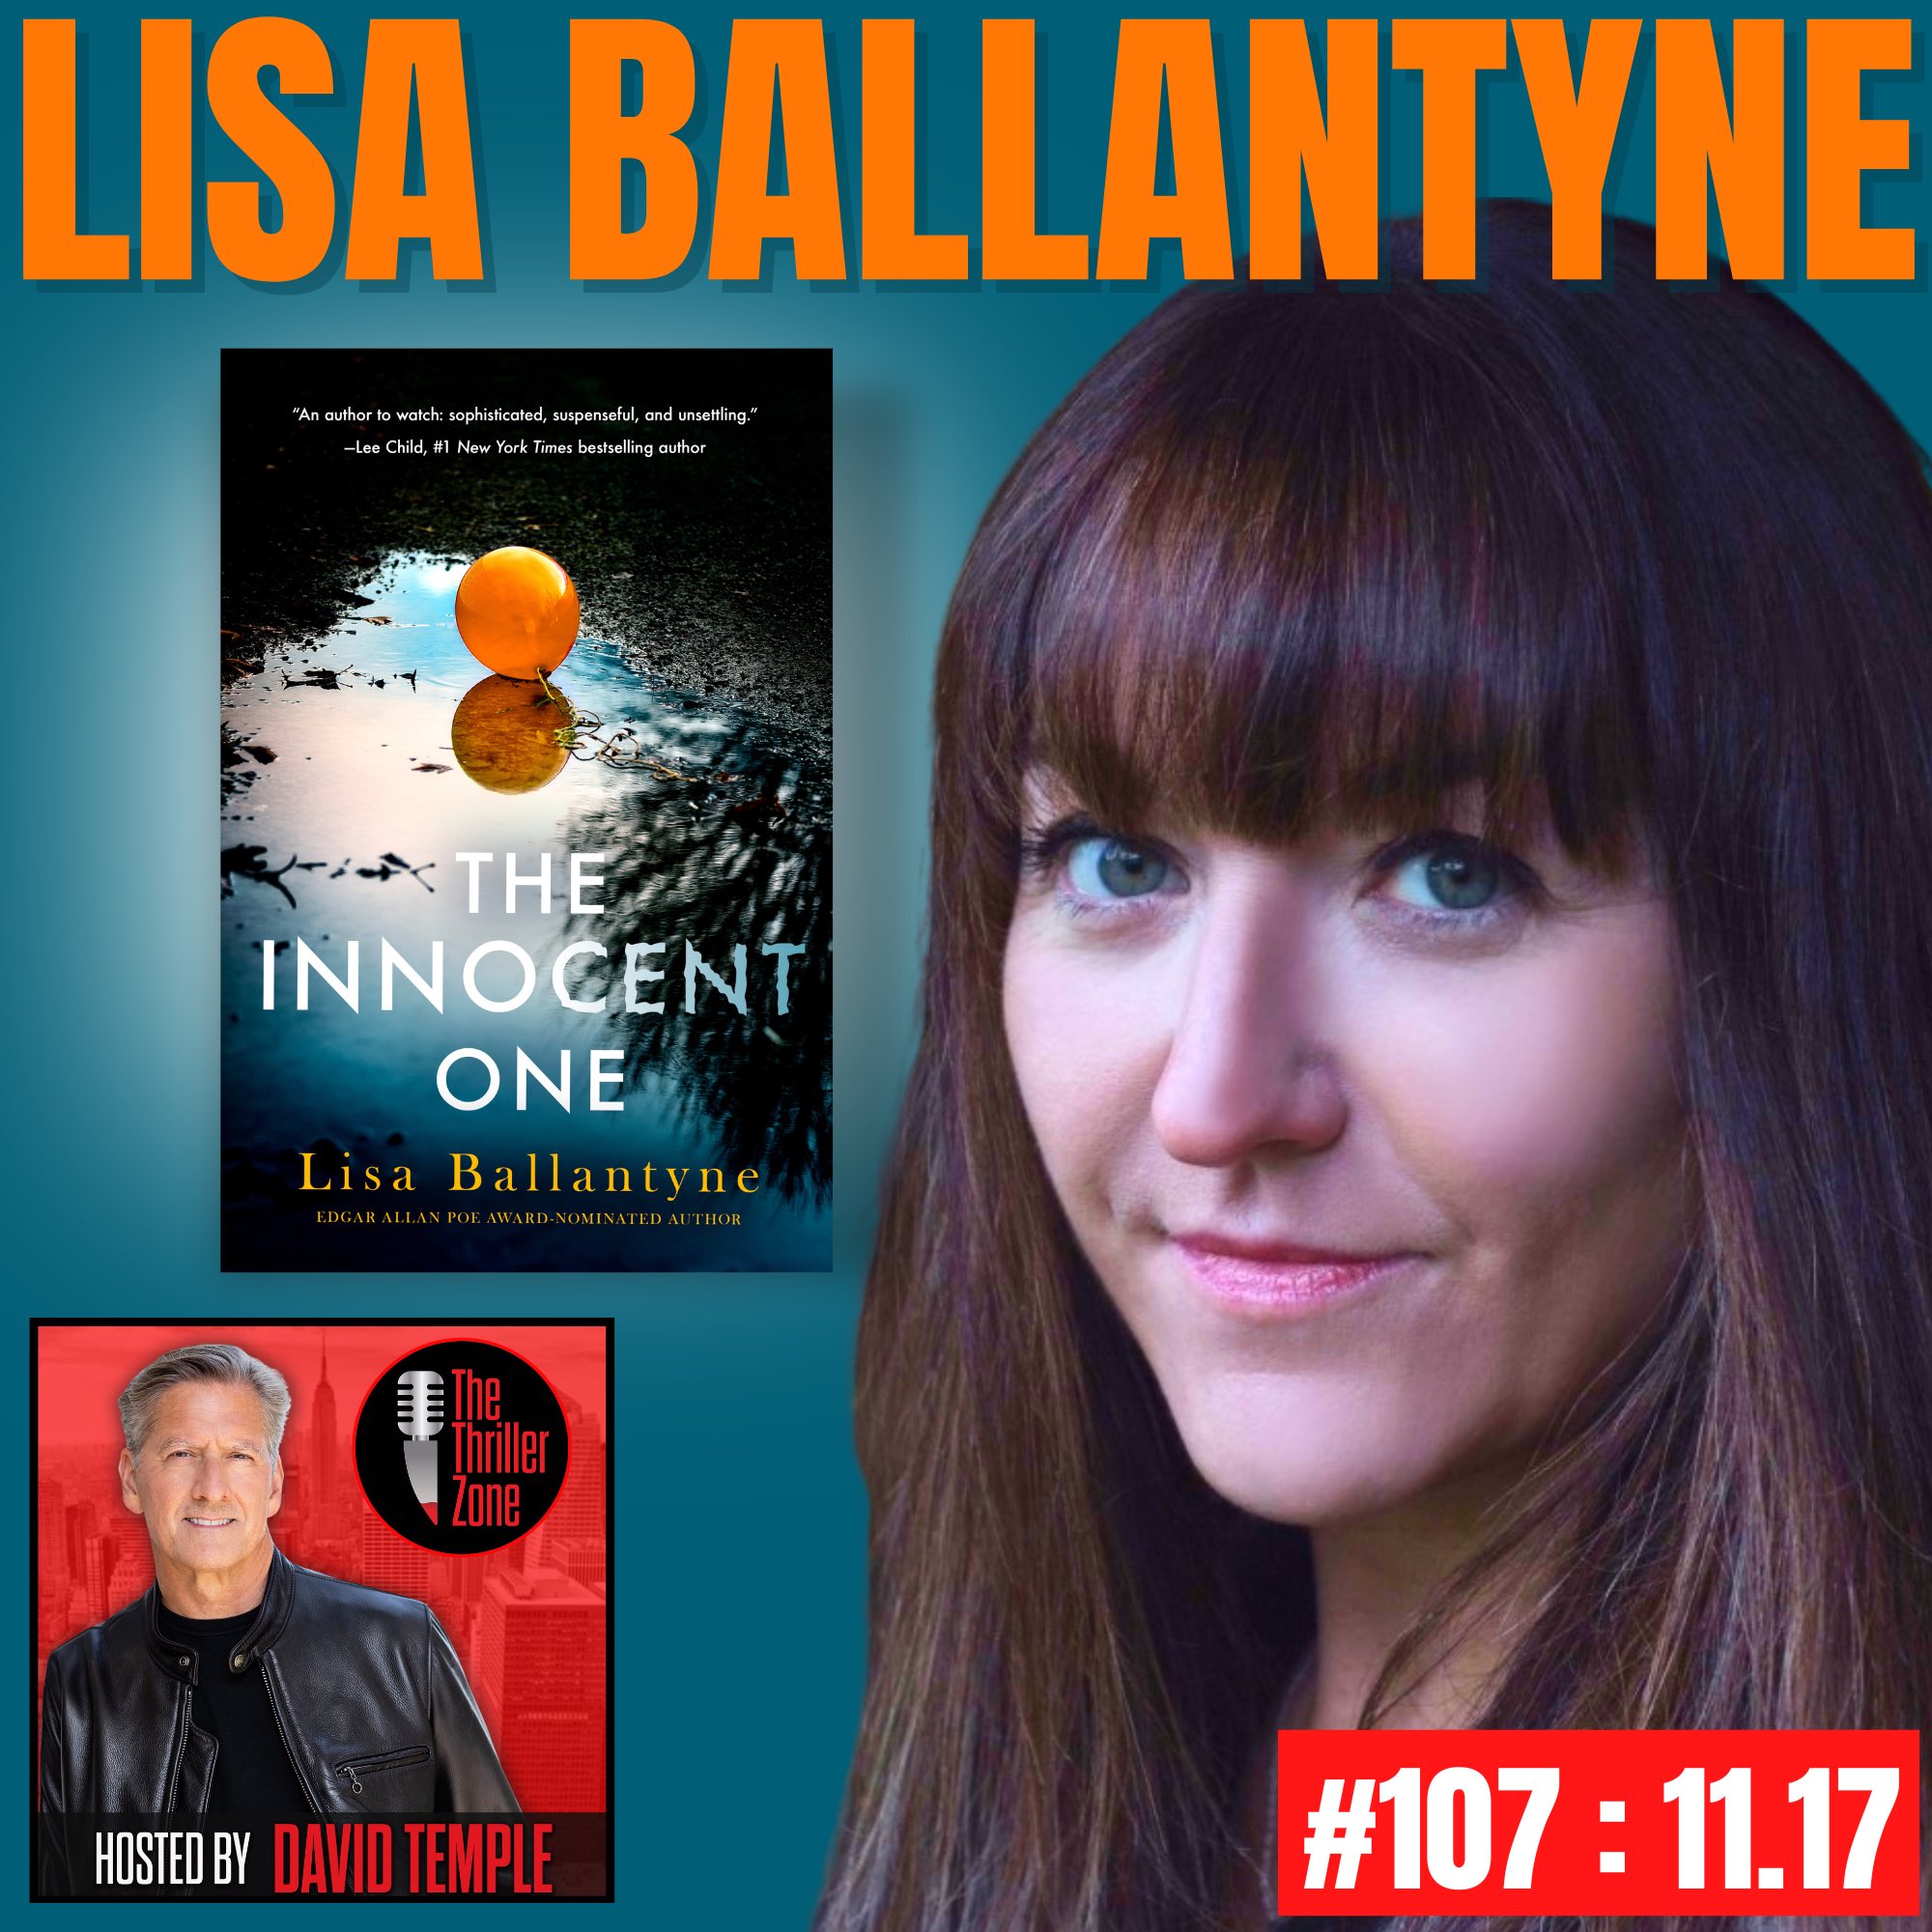 Lisa Ballantyne, author of The Innocent One Image